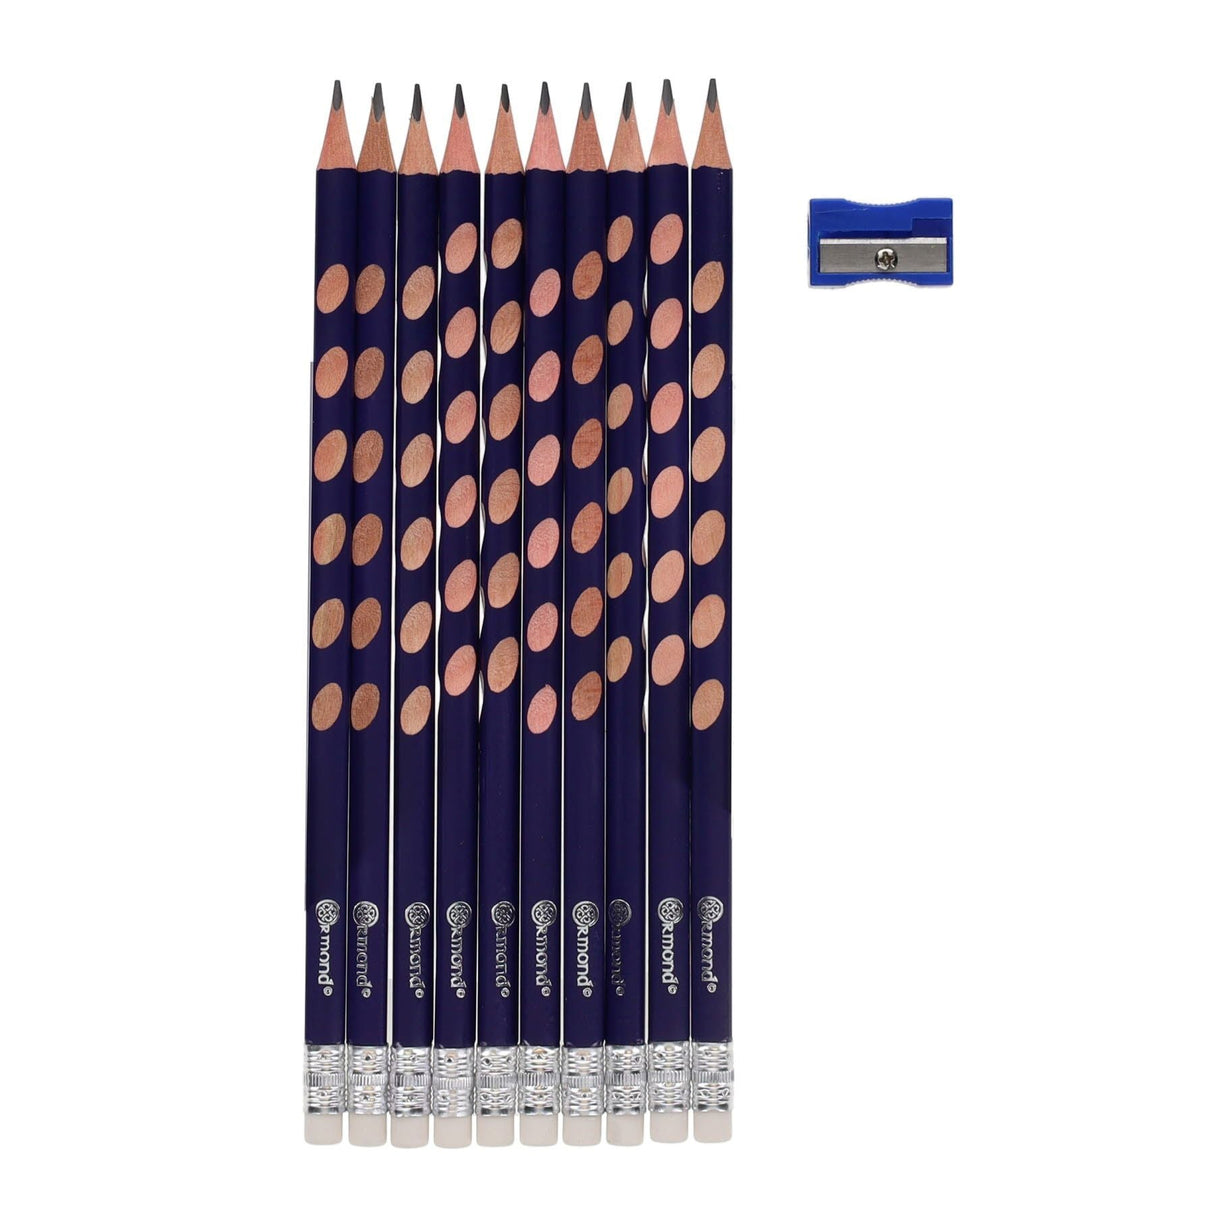 Ormond Finger Fit Hb Triangular Pencils With Sharpener - Pack of 10 | Stationery Shop UK